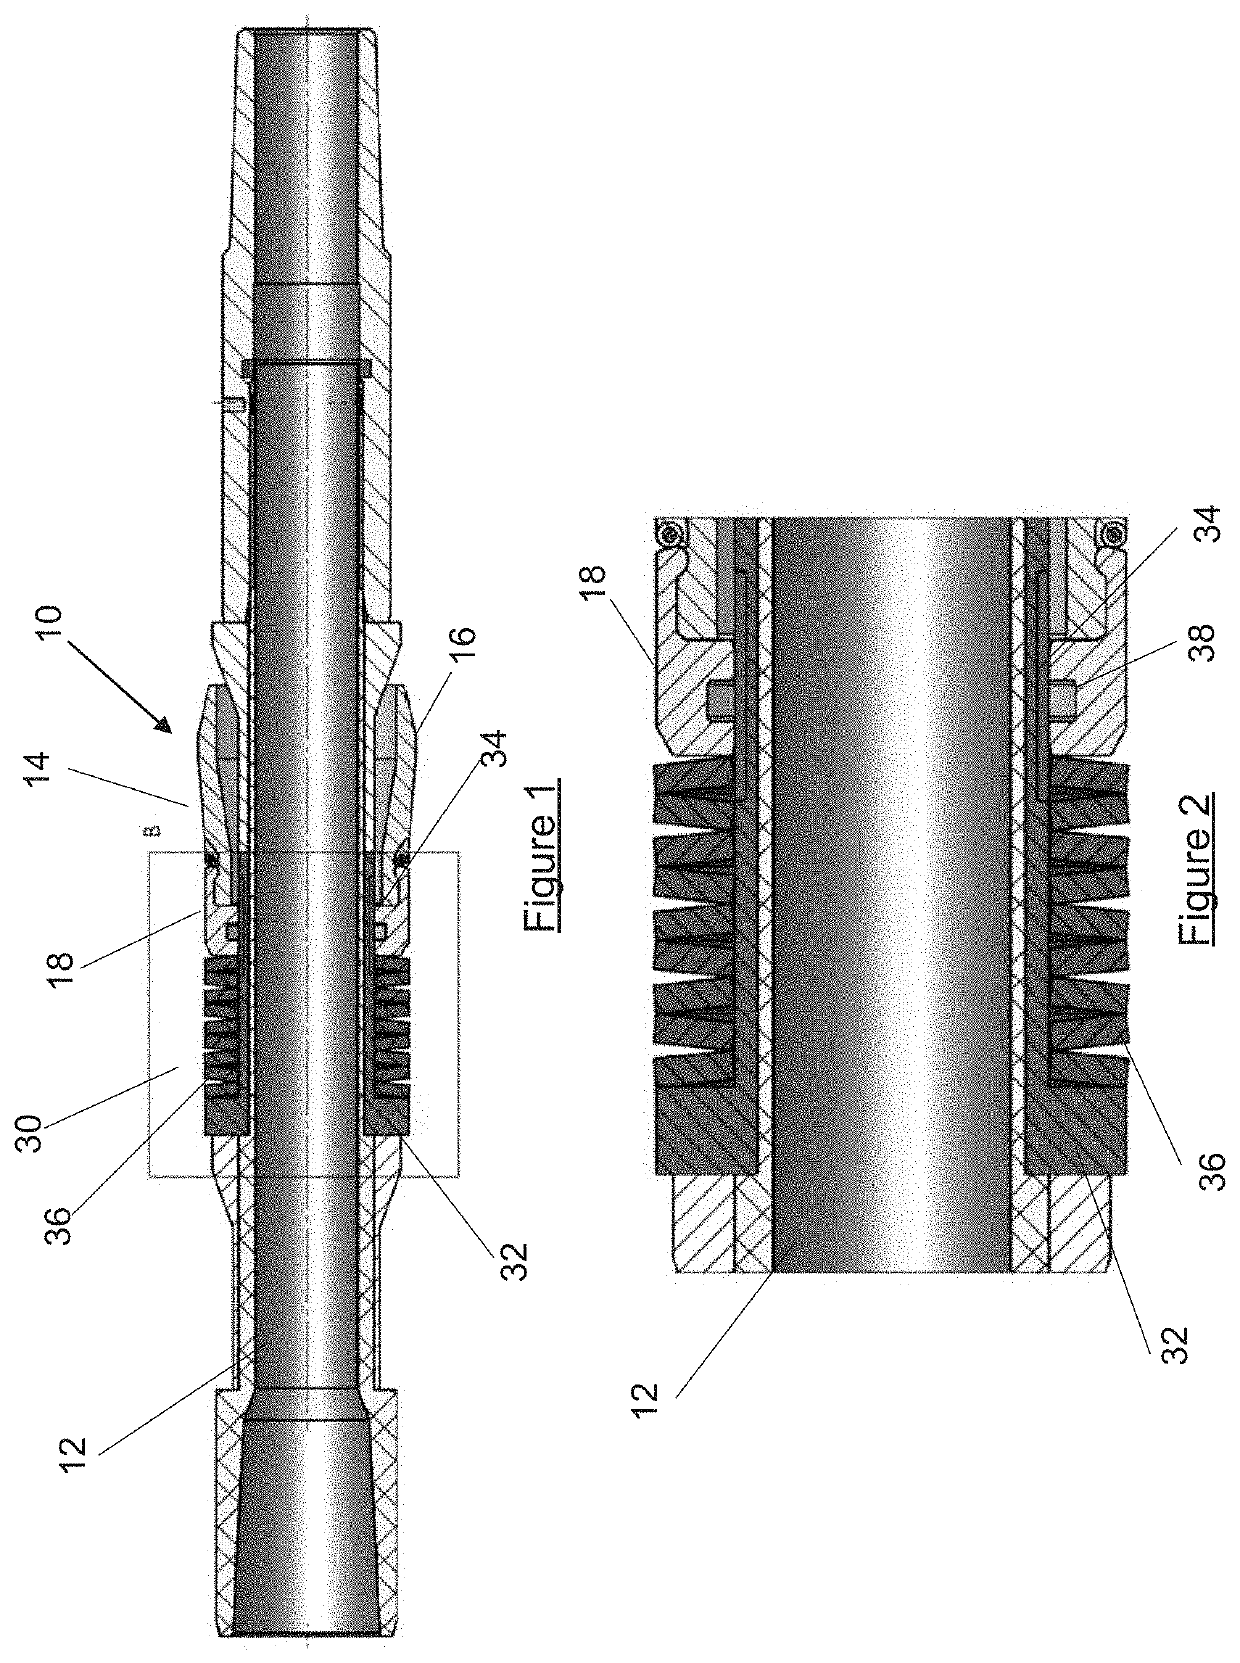 Downhole sealing apparatus and method